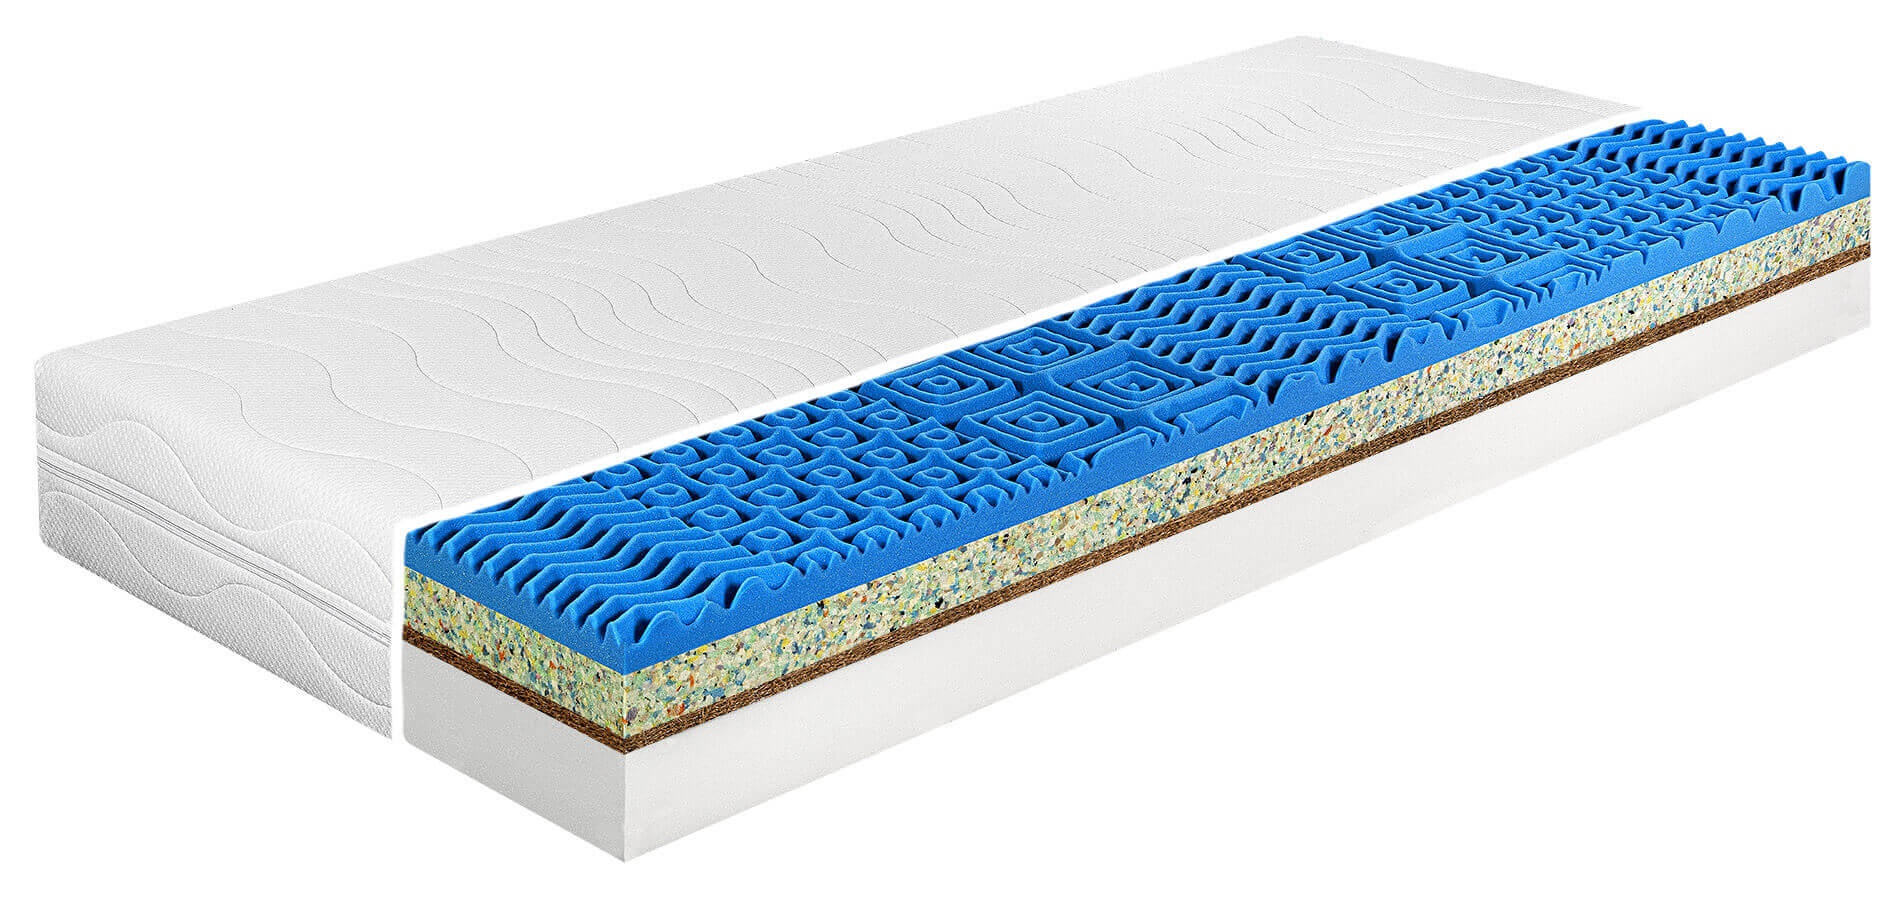 Sendvičová matrace ZEUS PLUS, výška 22 cm Rozměr: 90 x 200 cm, Materiál: chloe aktiv